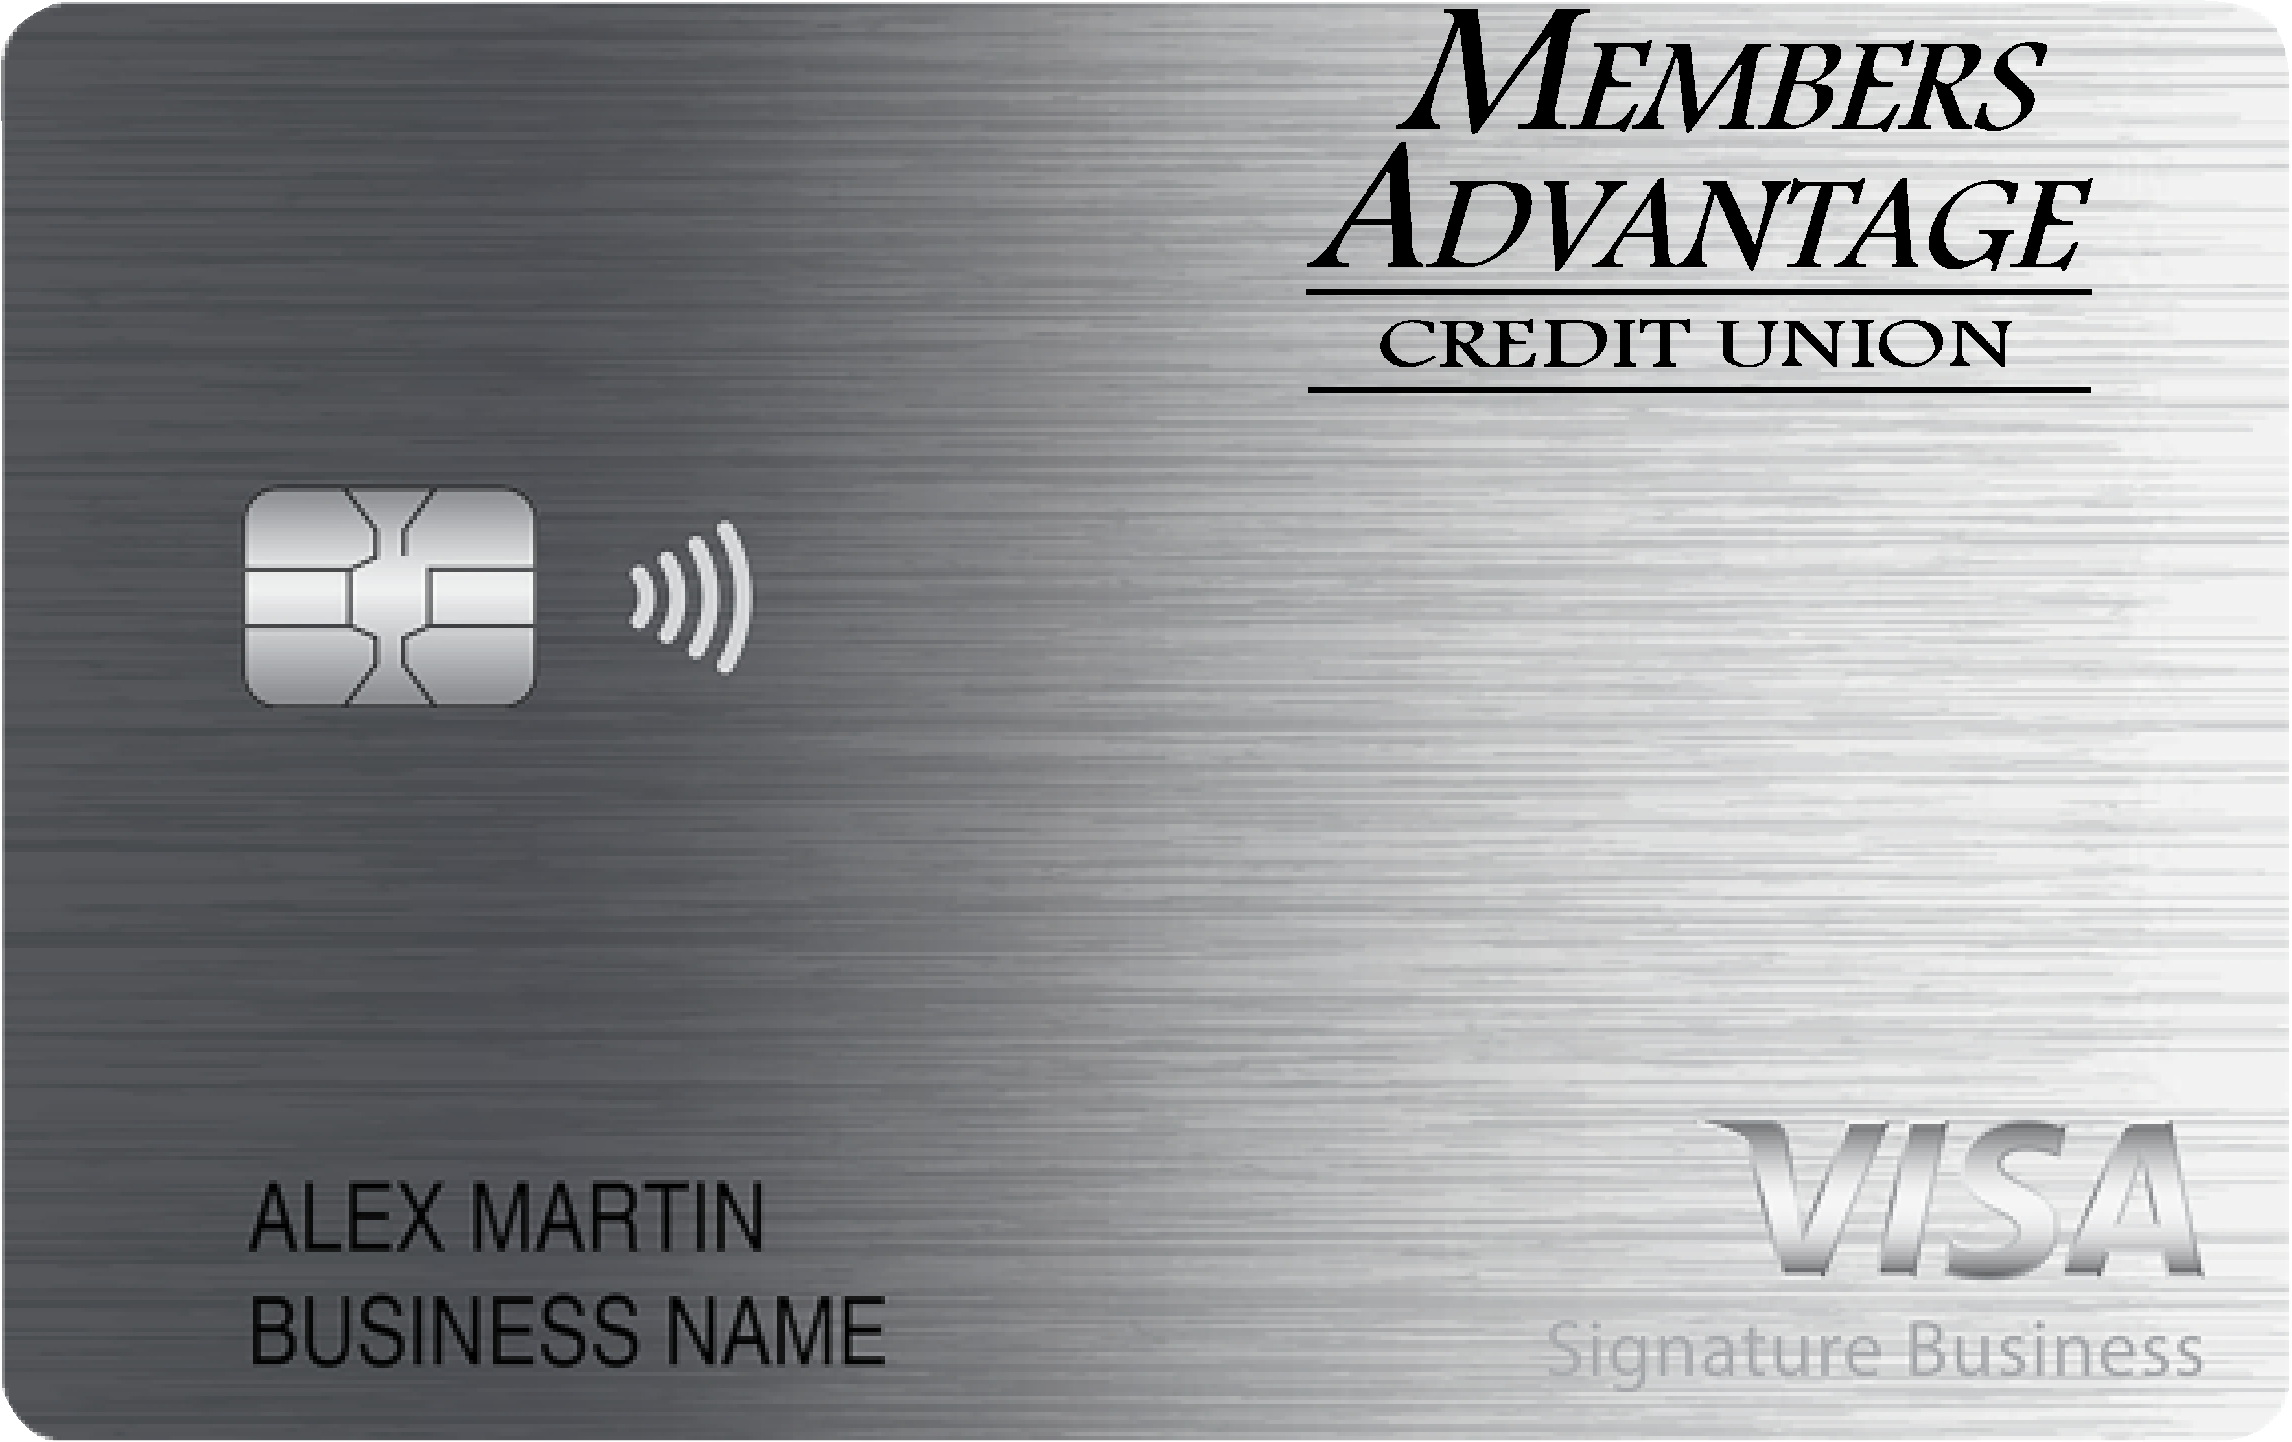 Members Advantage Credit Union Smart Business Rewards Card